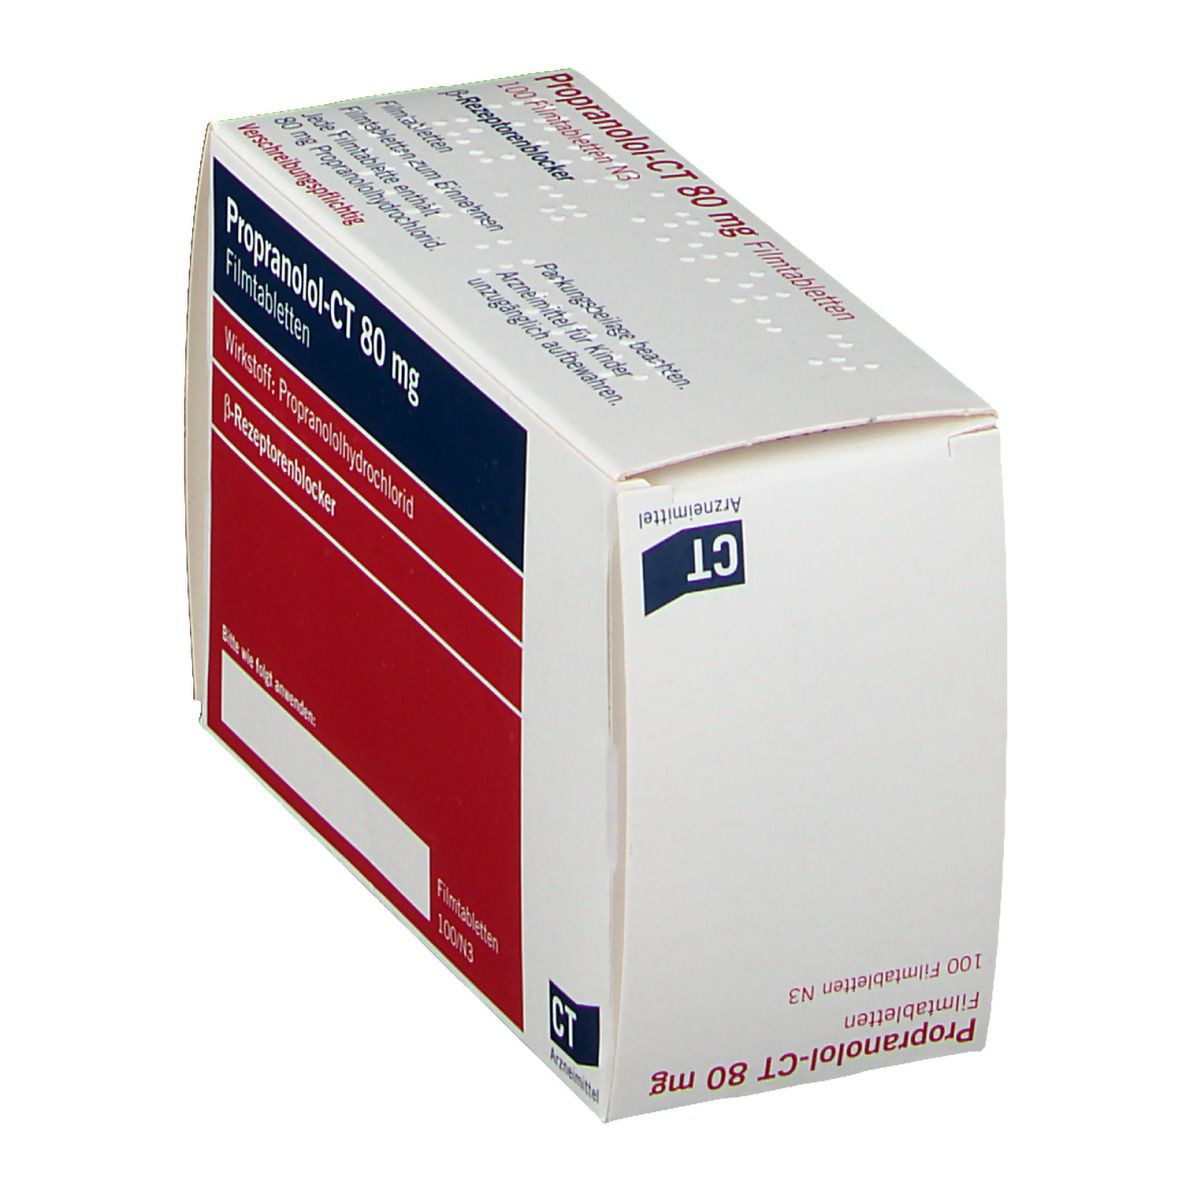 Propranolol-CT 80 mg